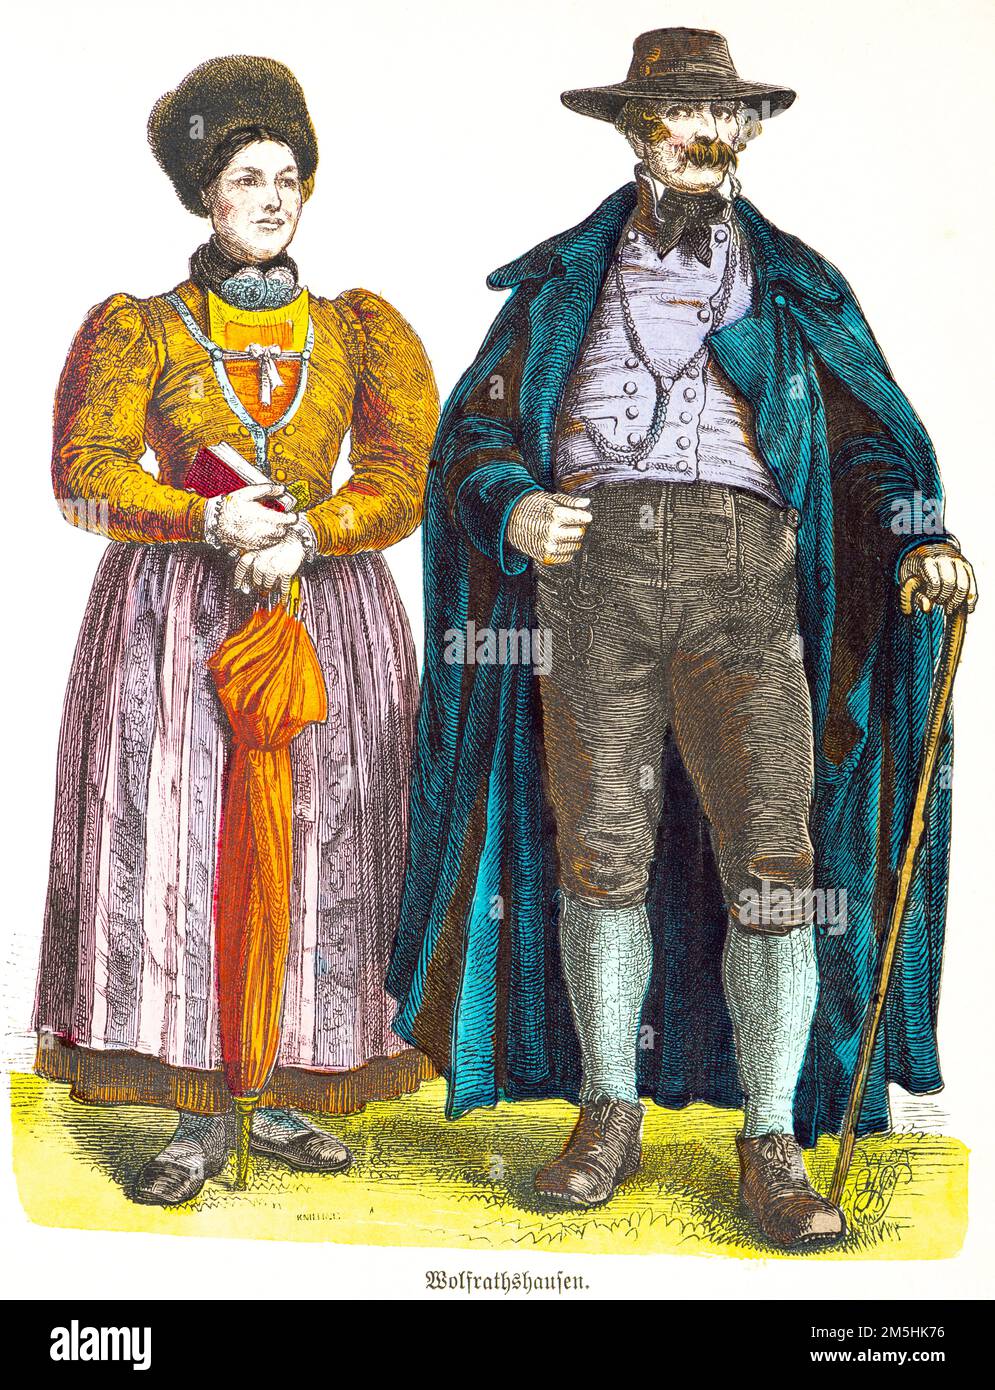 Traditional costumes of Wolfratshausen, Bavaria, Southern Germany, 19th century, ccolured historische Illustration 1890, Münchener Bilderbogen 1890 Stock Photo